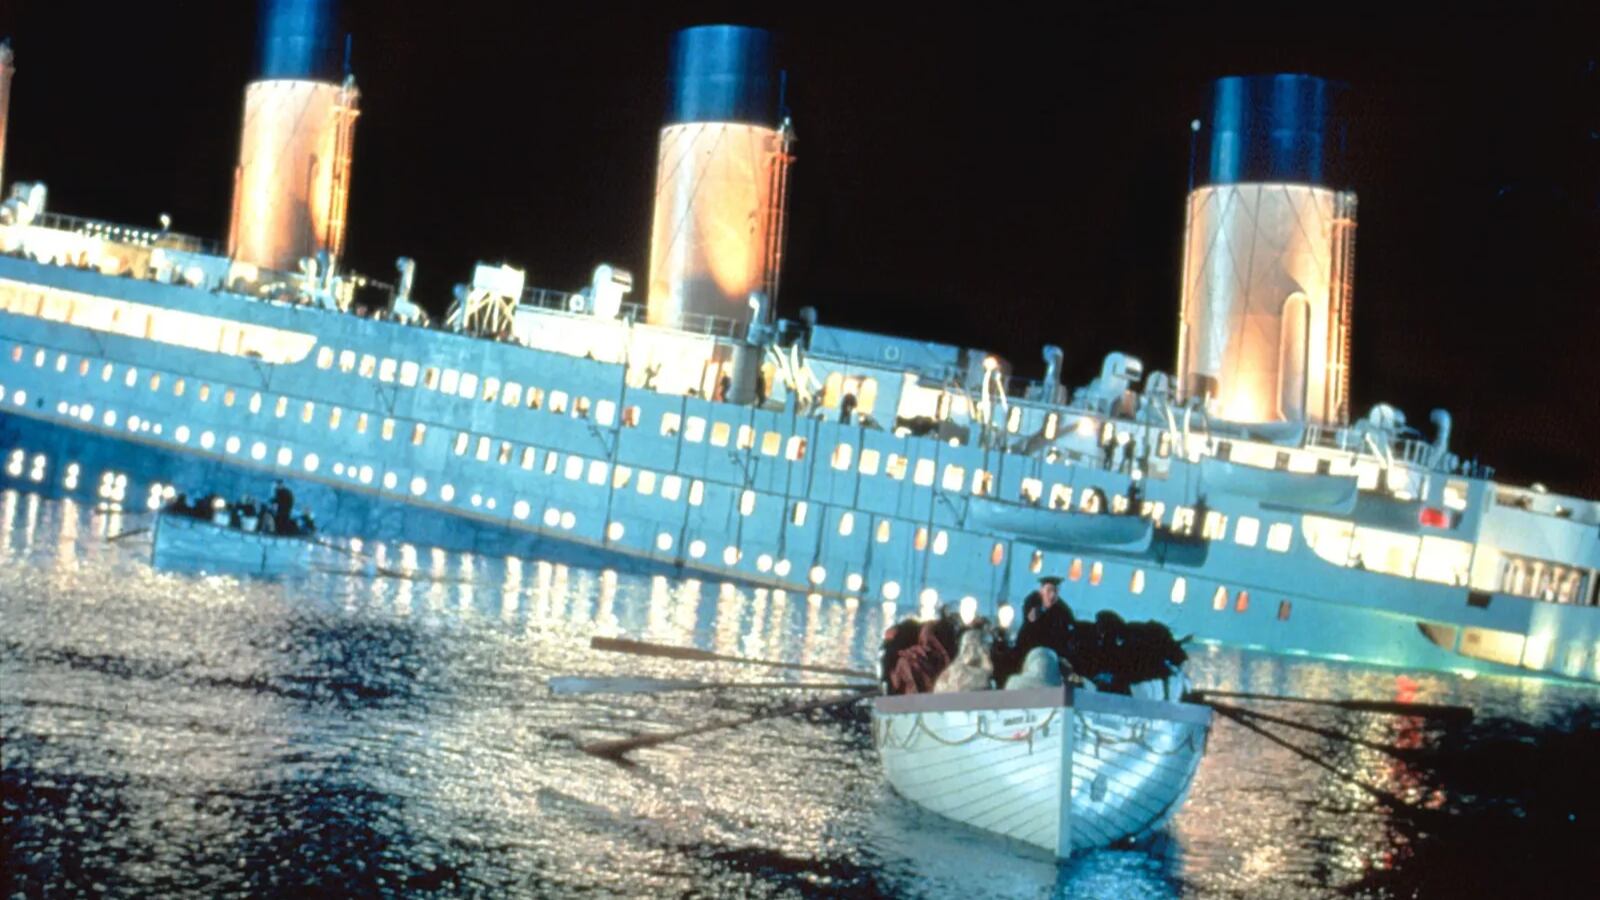 La construcción del Titanic II será una réplica exacta del original que se hundió en 1912.